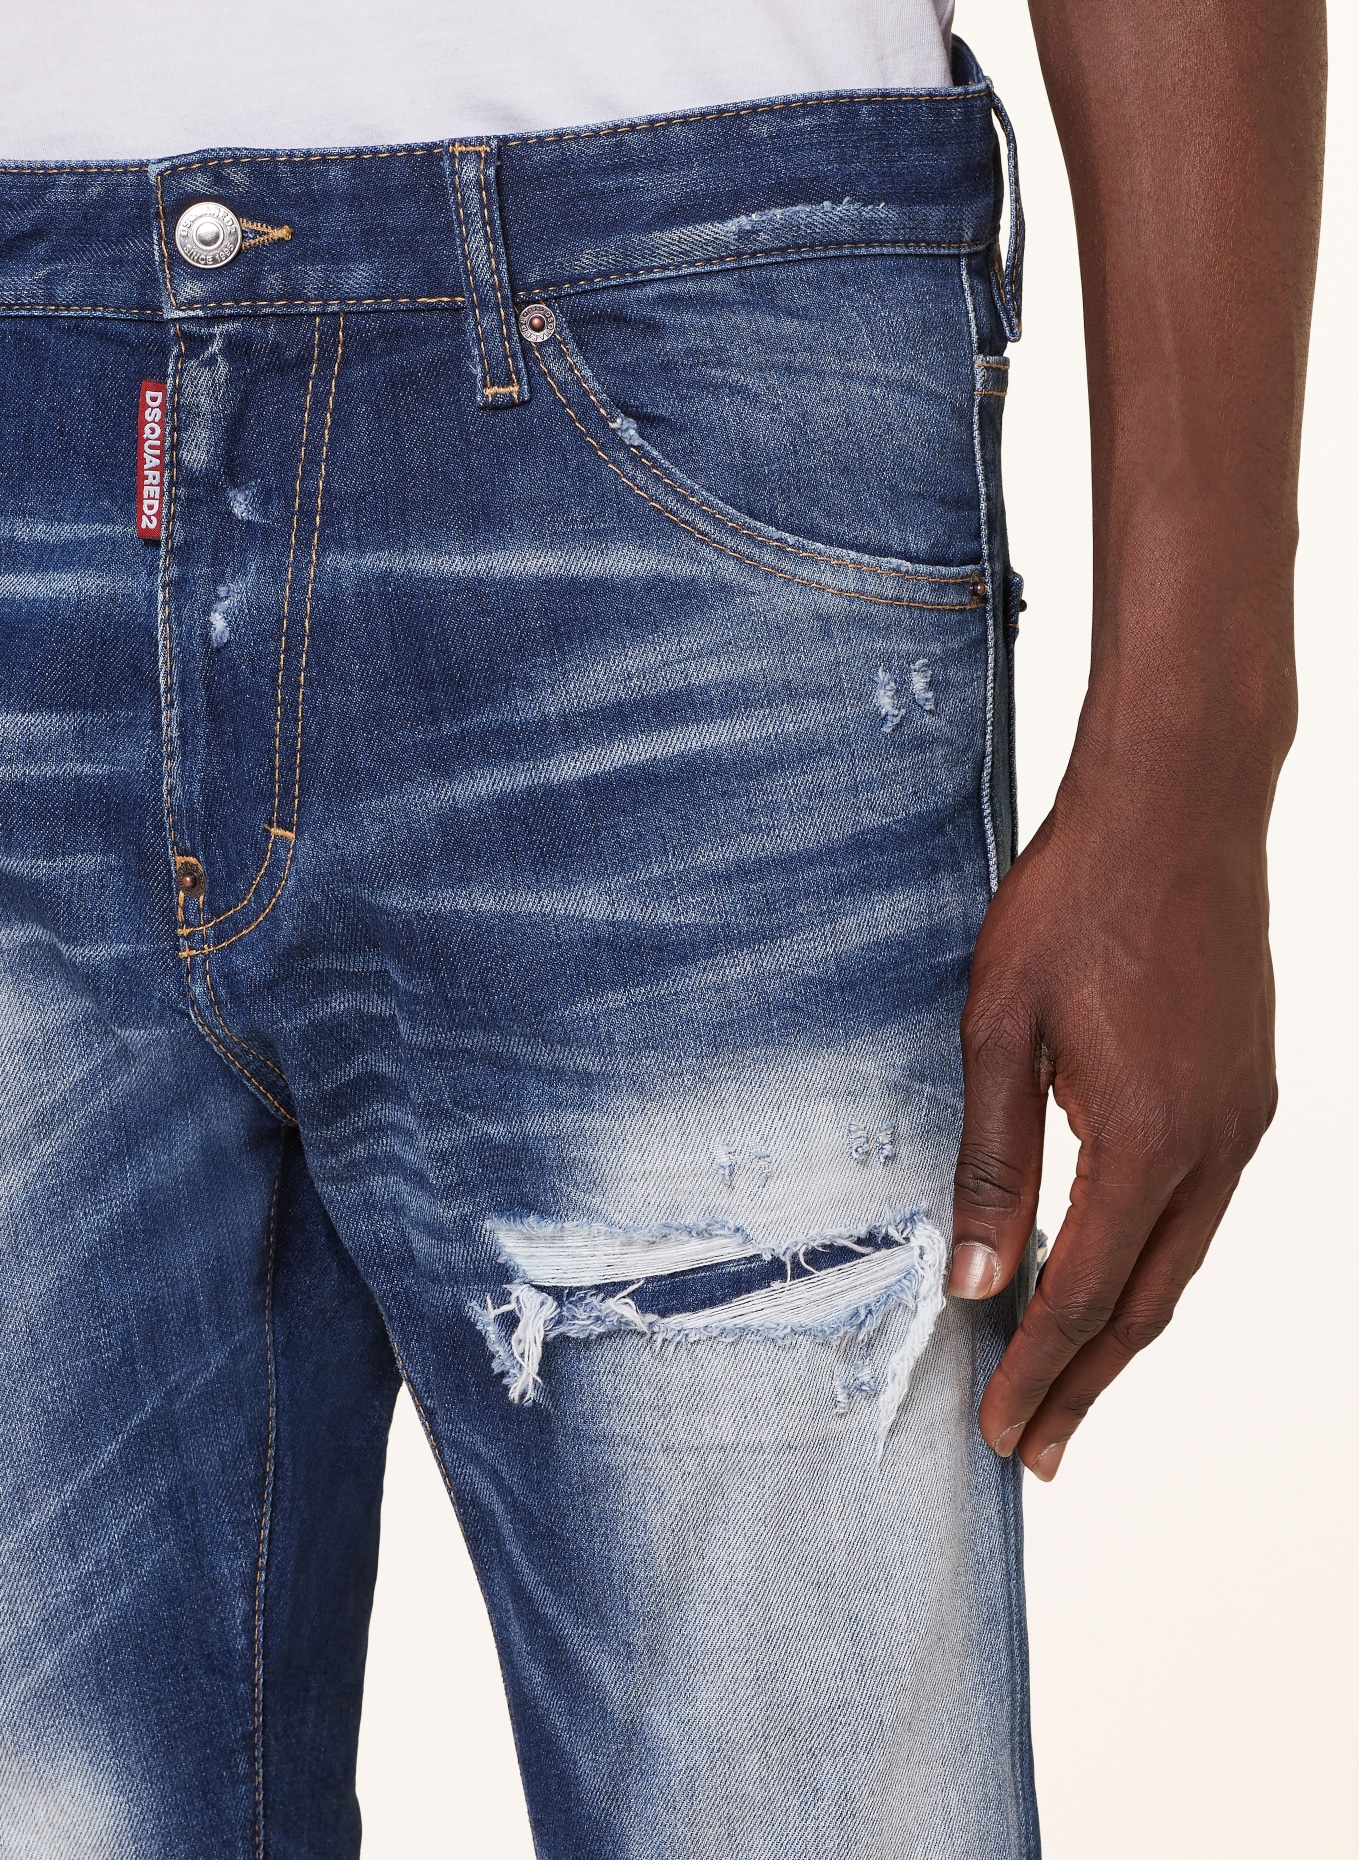 DSQUARED2 Destroyed jeans COOL GUY extra slim fit, Color: 470 BLUE NAVY (Image 5)